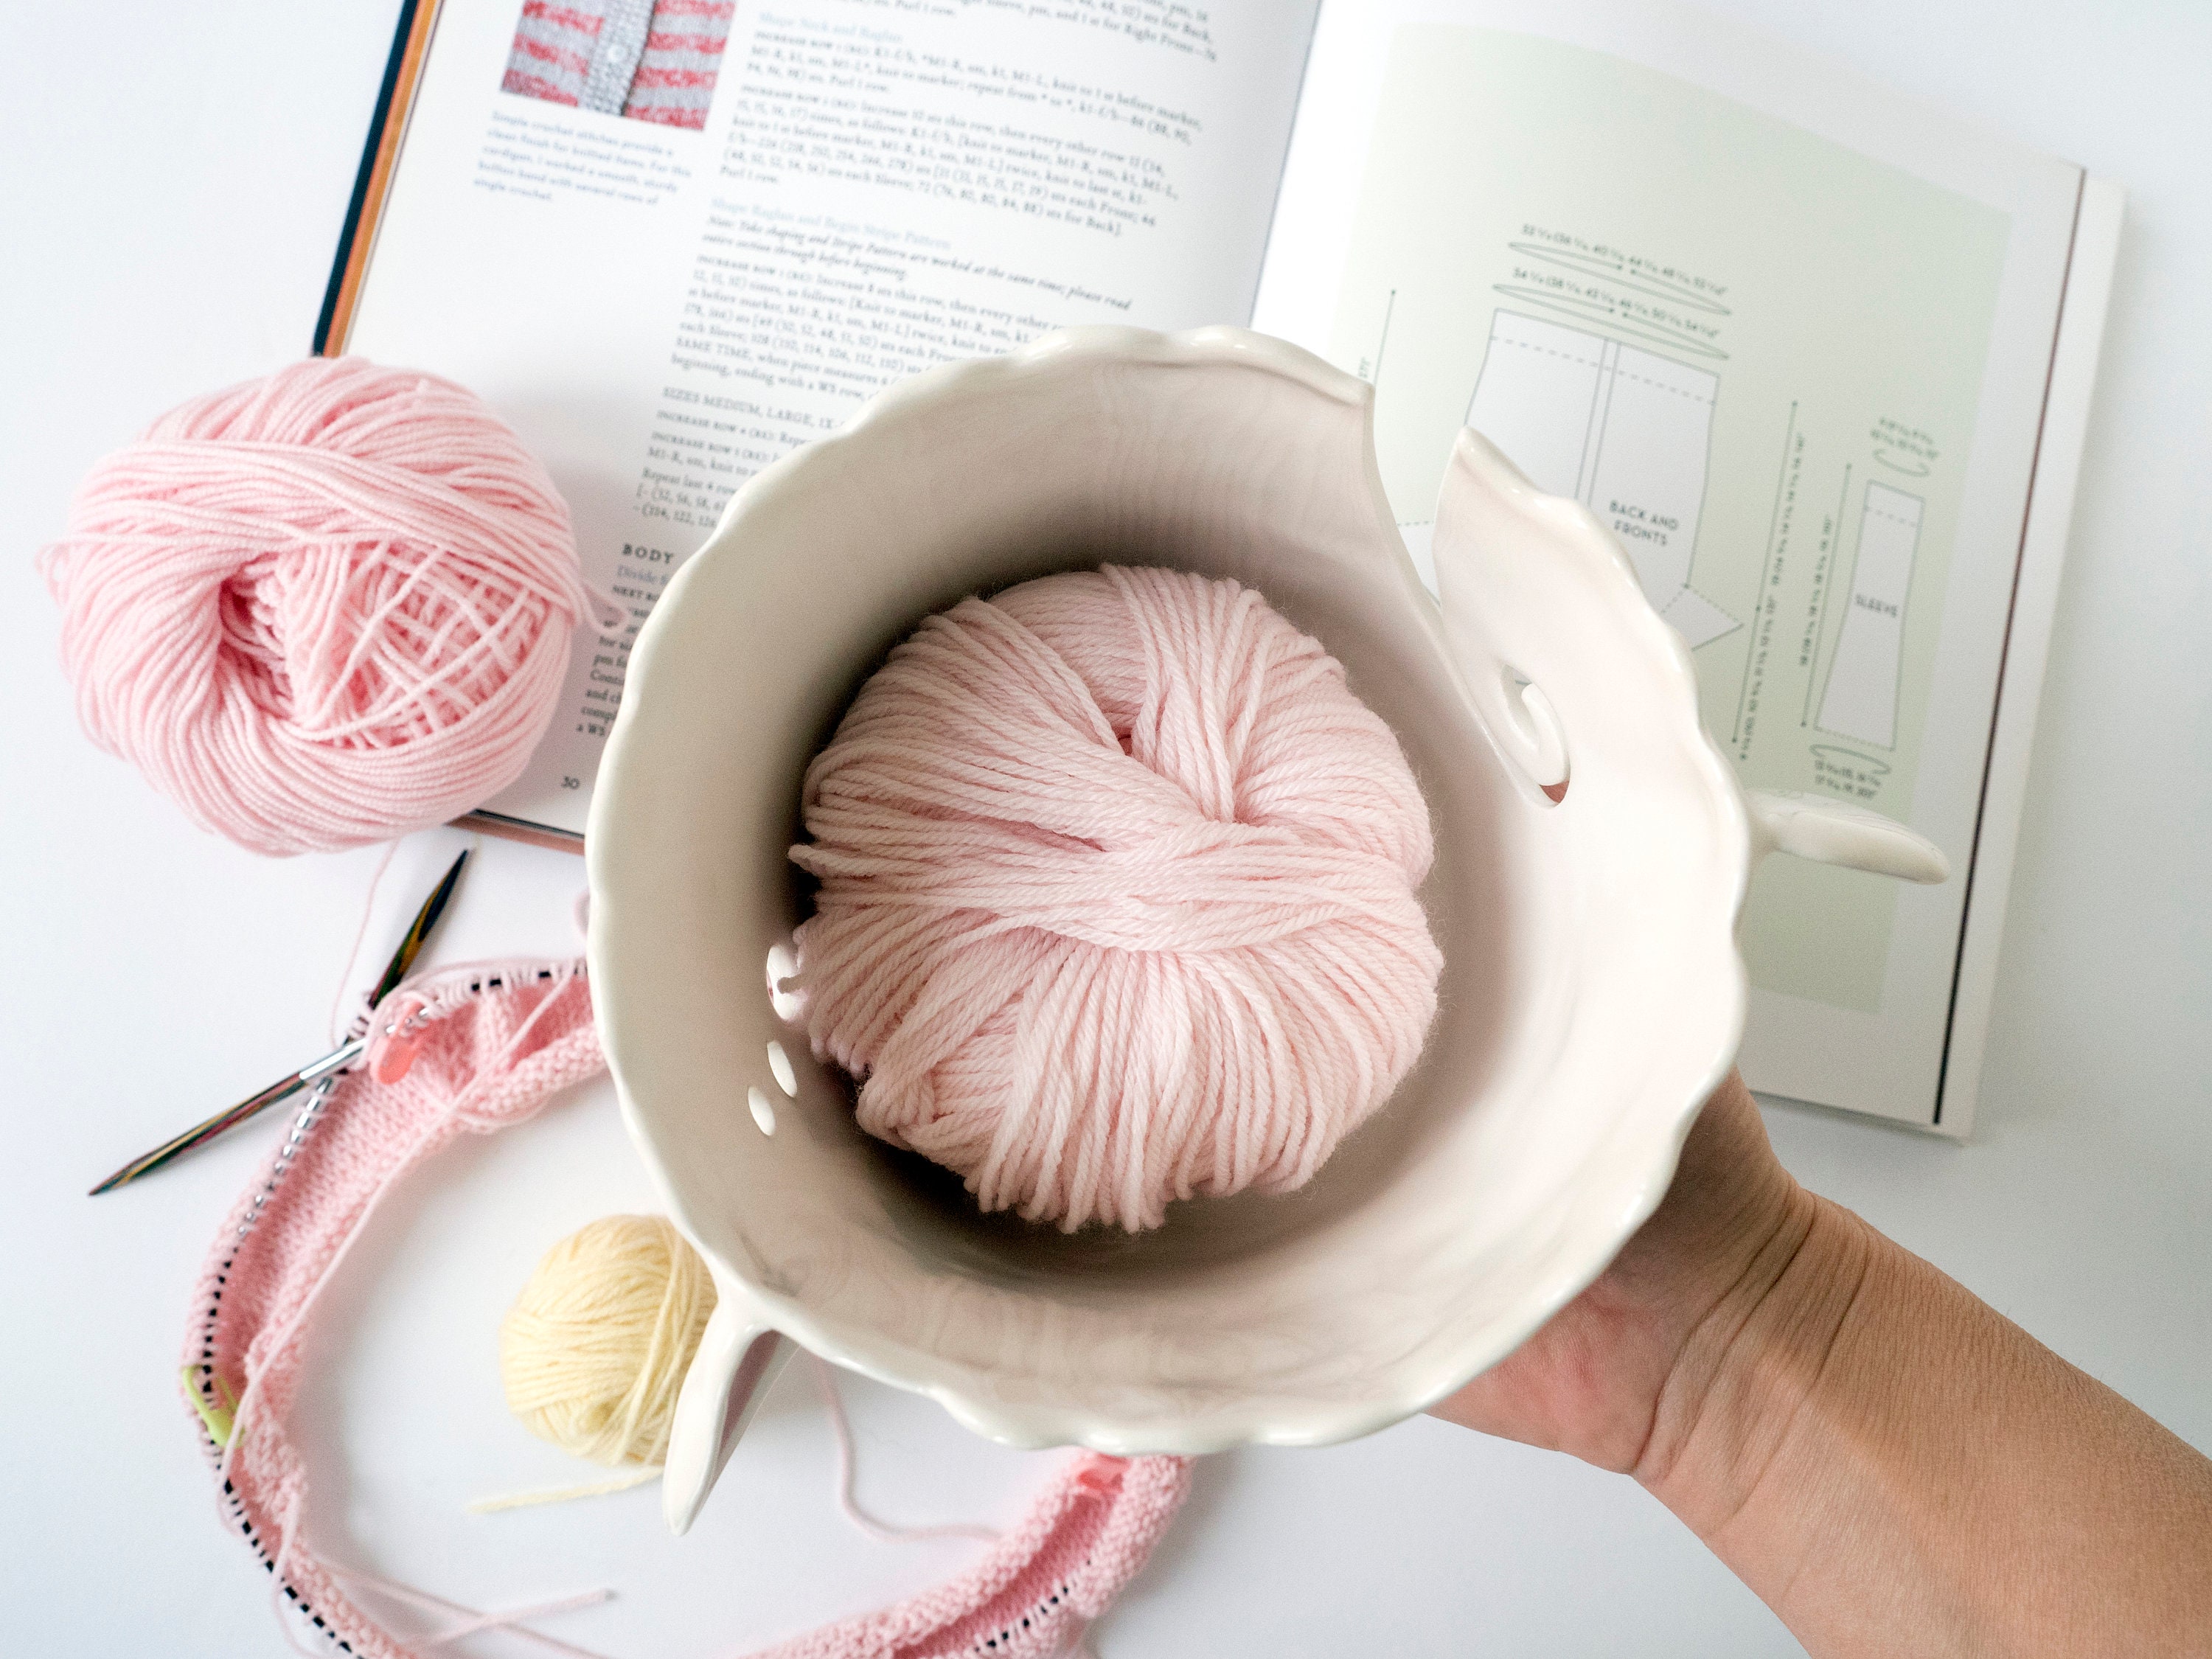 YingXue Sheep Ceramic Yarn Bowl Large Knitting Bowl, 6.7 x 4.7 Inches, Handmade Yarn Holder for Crocheting, Ball of Yarn for tangle-f